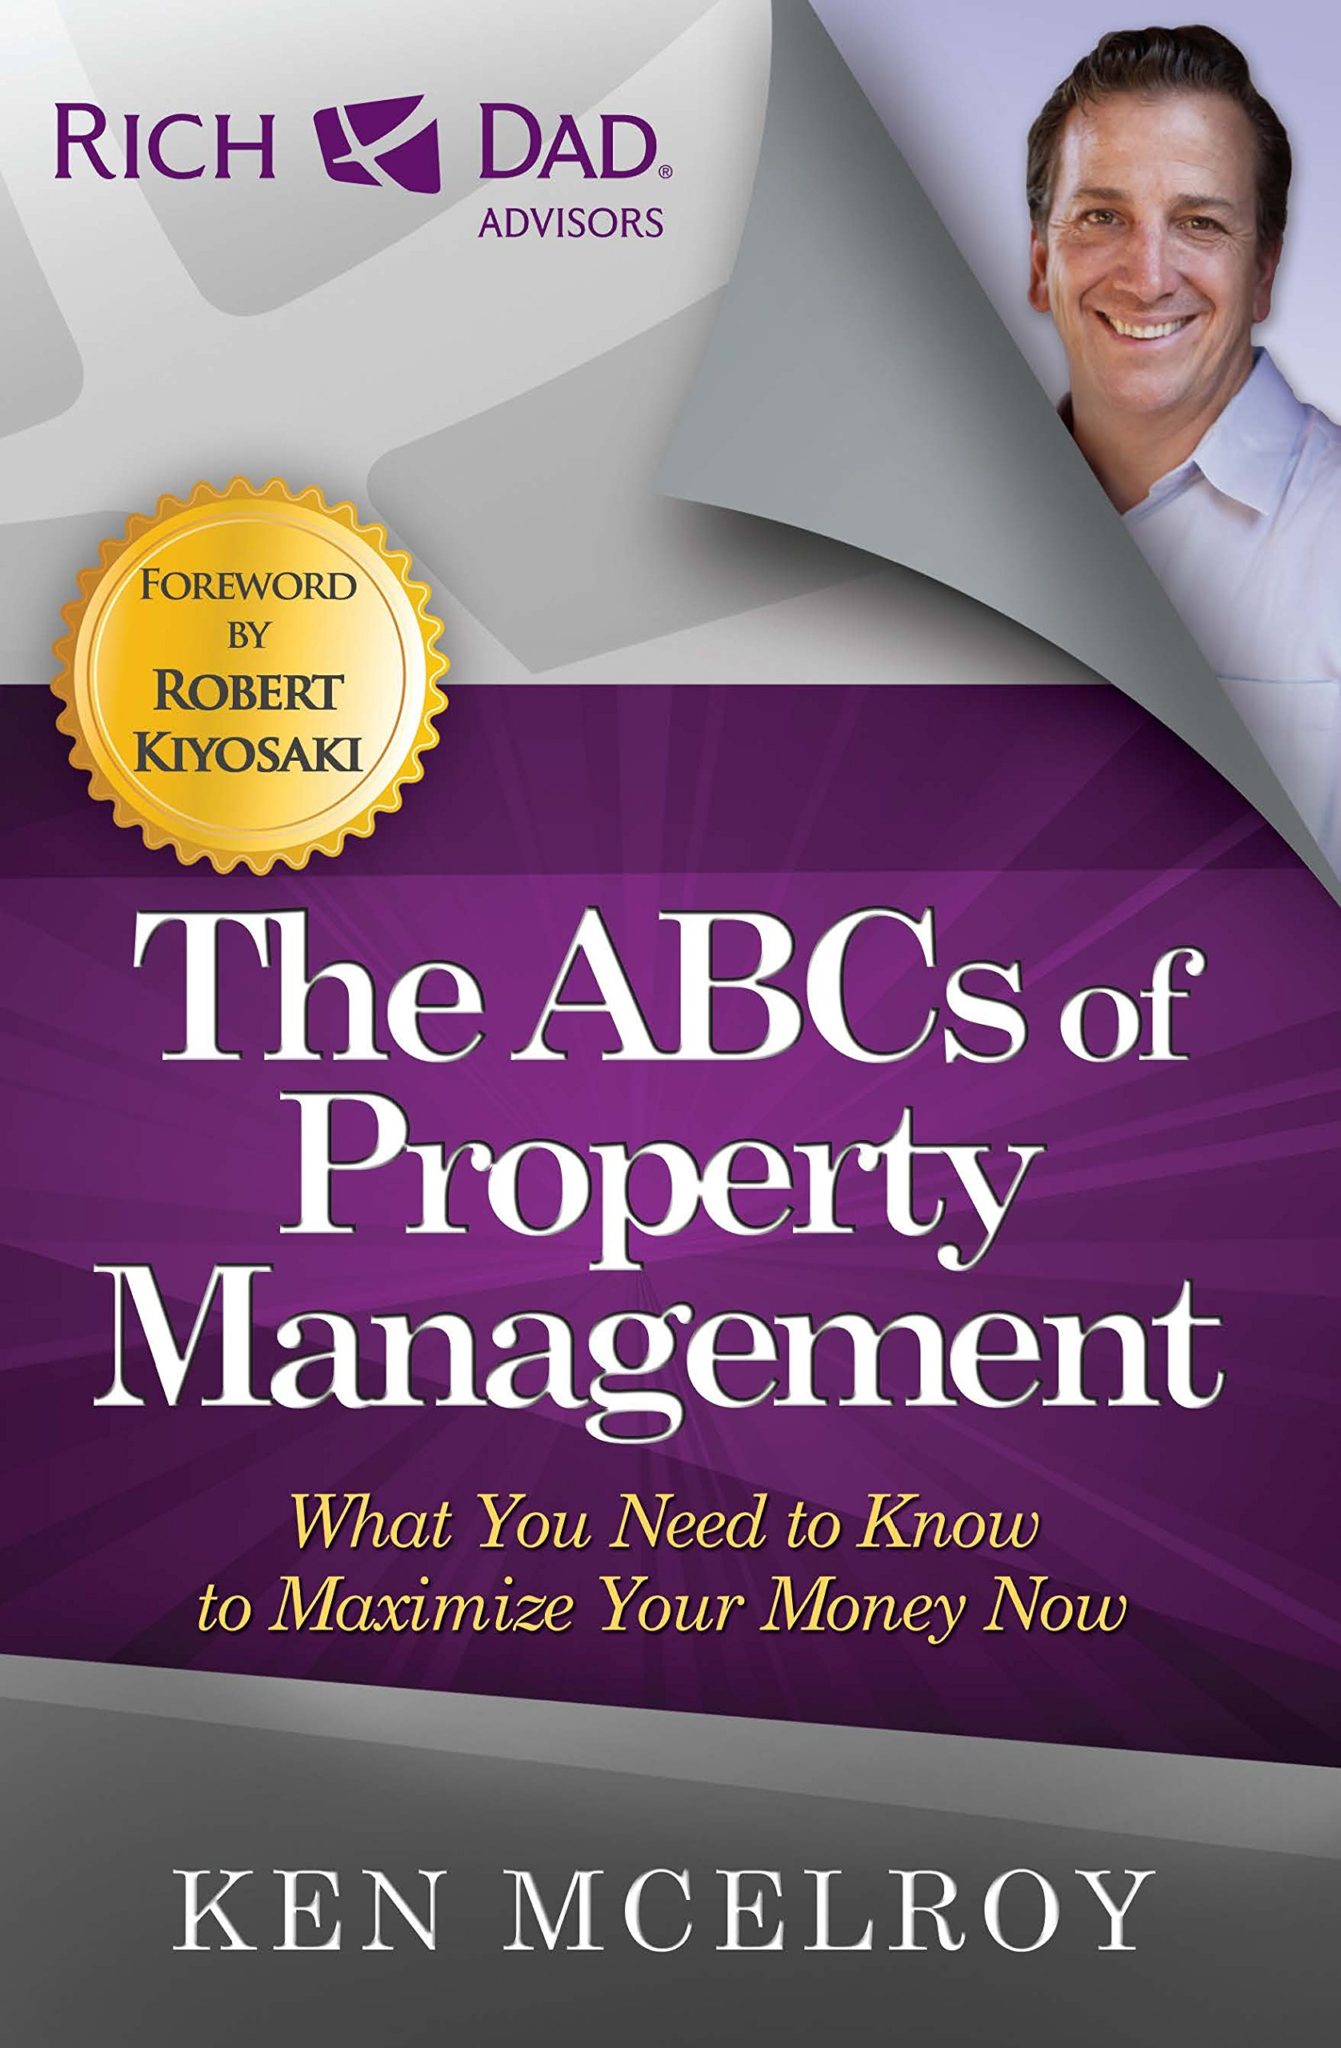 Best Real Estate Book on Property Management